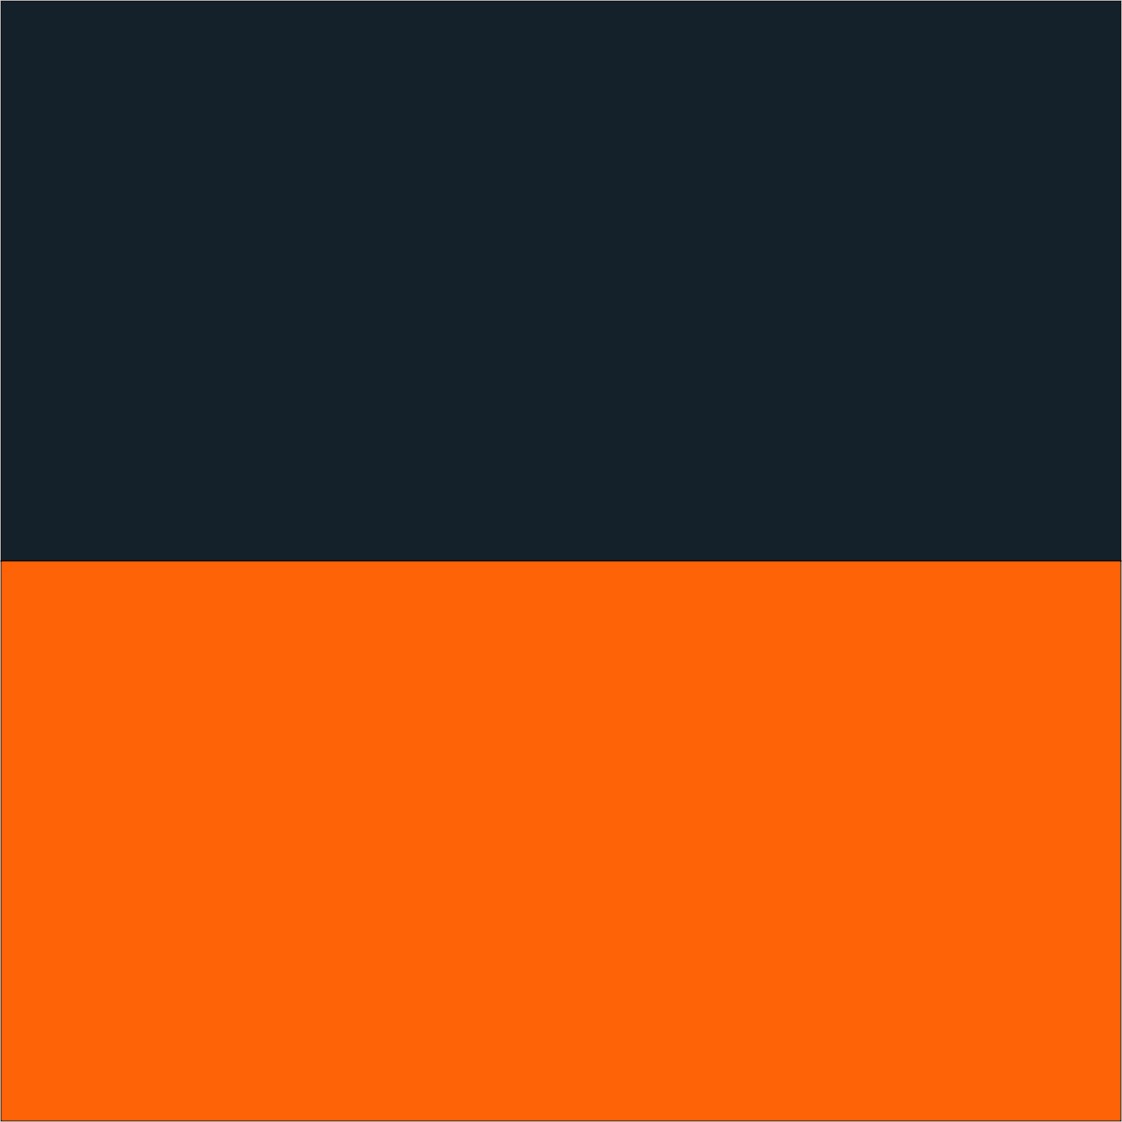 Dark Grey/Orange